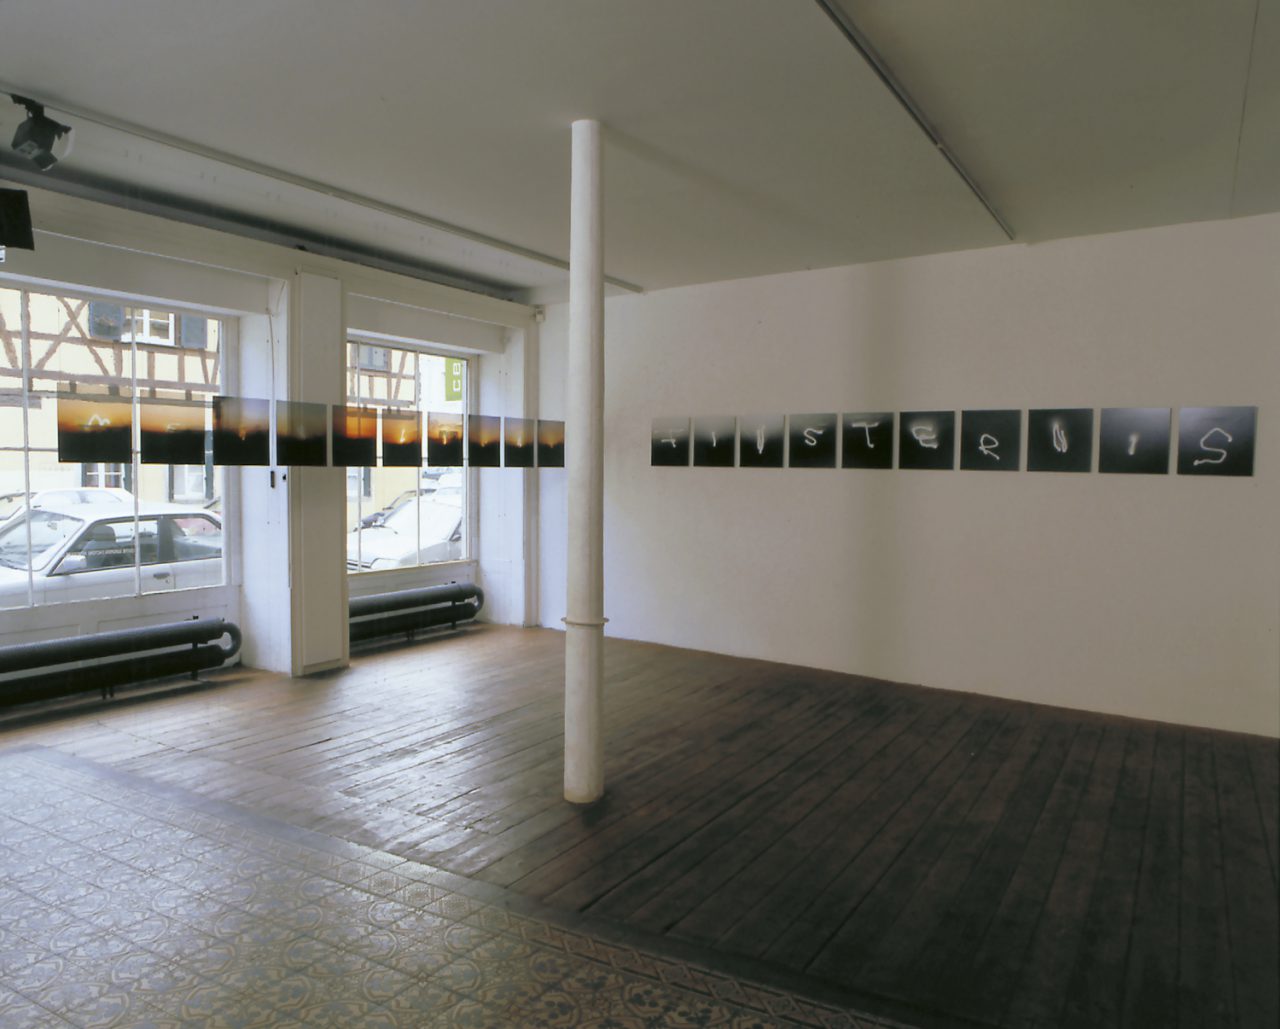 Mehr Licht - Finsternis | 1999 | Installation ceaac, Centre Européen d’Actions Artistiques Contemporaines, Strasbourg, France